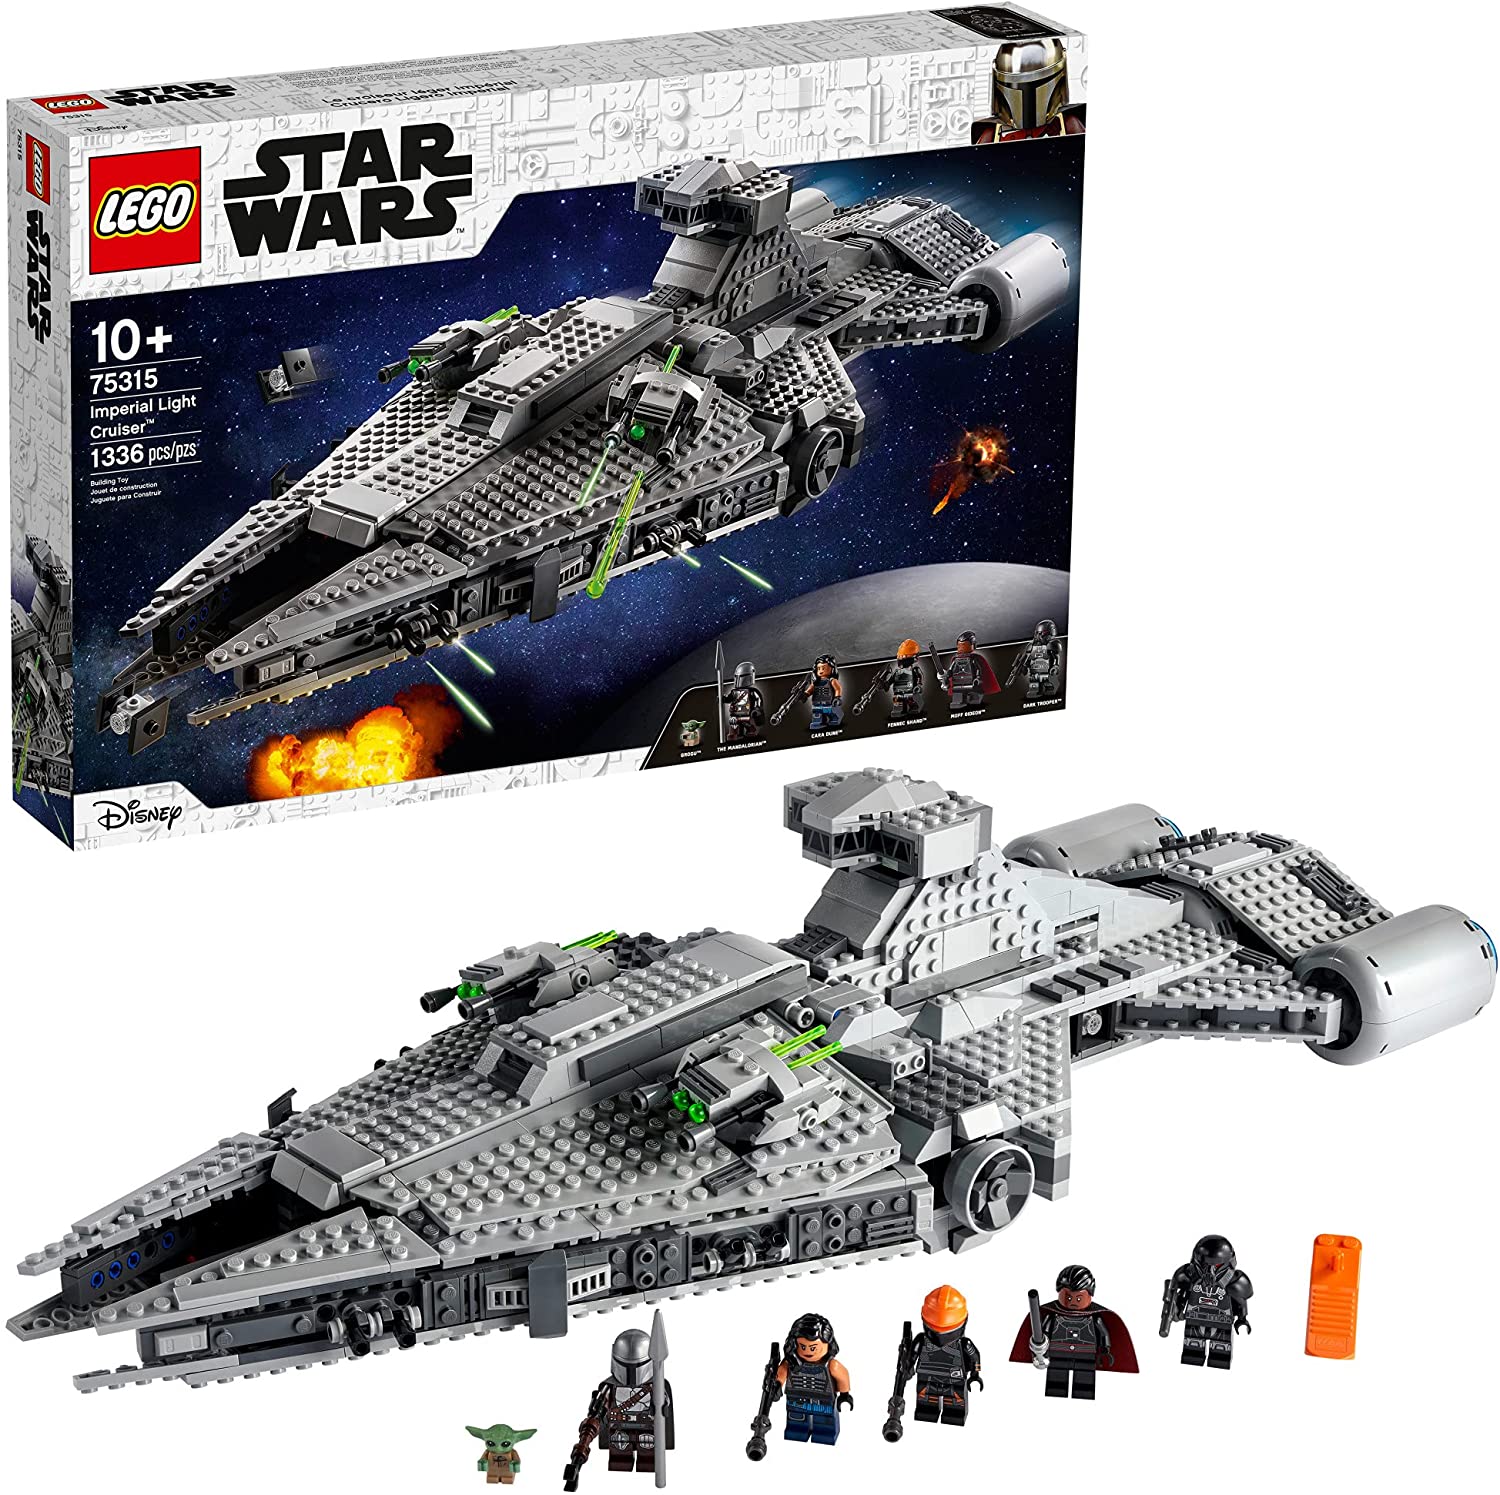 LEGO Star Wars: The Mandalorian Imperial Light Cruiser Building Set (75315) $129.99 + Free Shipping